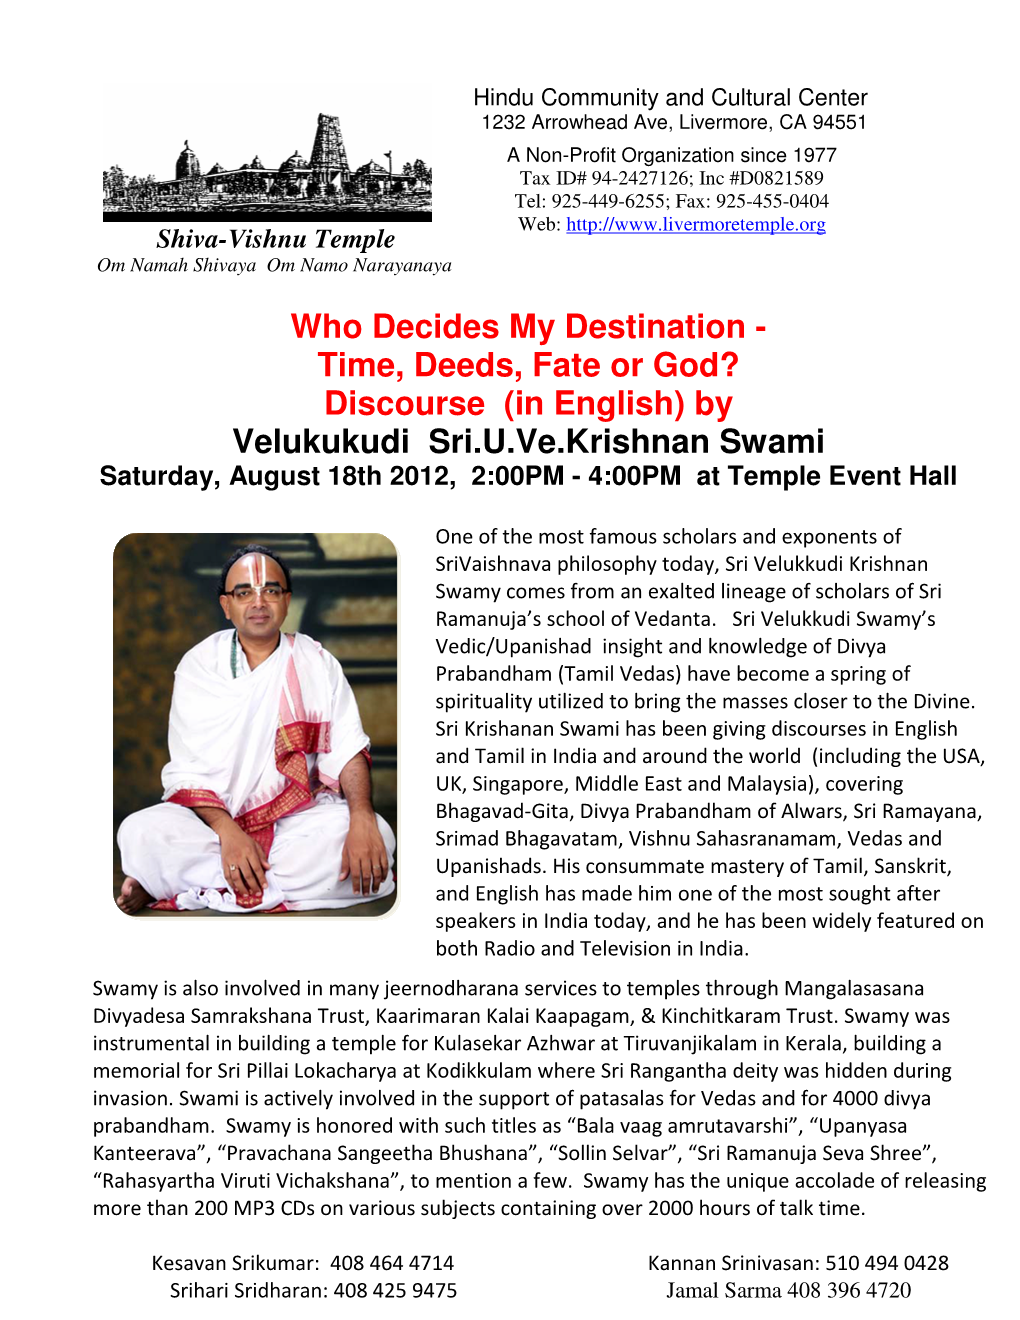 Discourse (In English) by Velukukudi Sri.U.Ve.Krishnan Swami Saturday, August 18Th 2012, 2:00PM - 4:00PM at Temple Event Hall